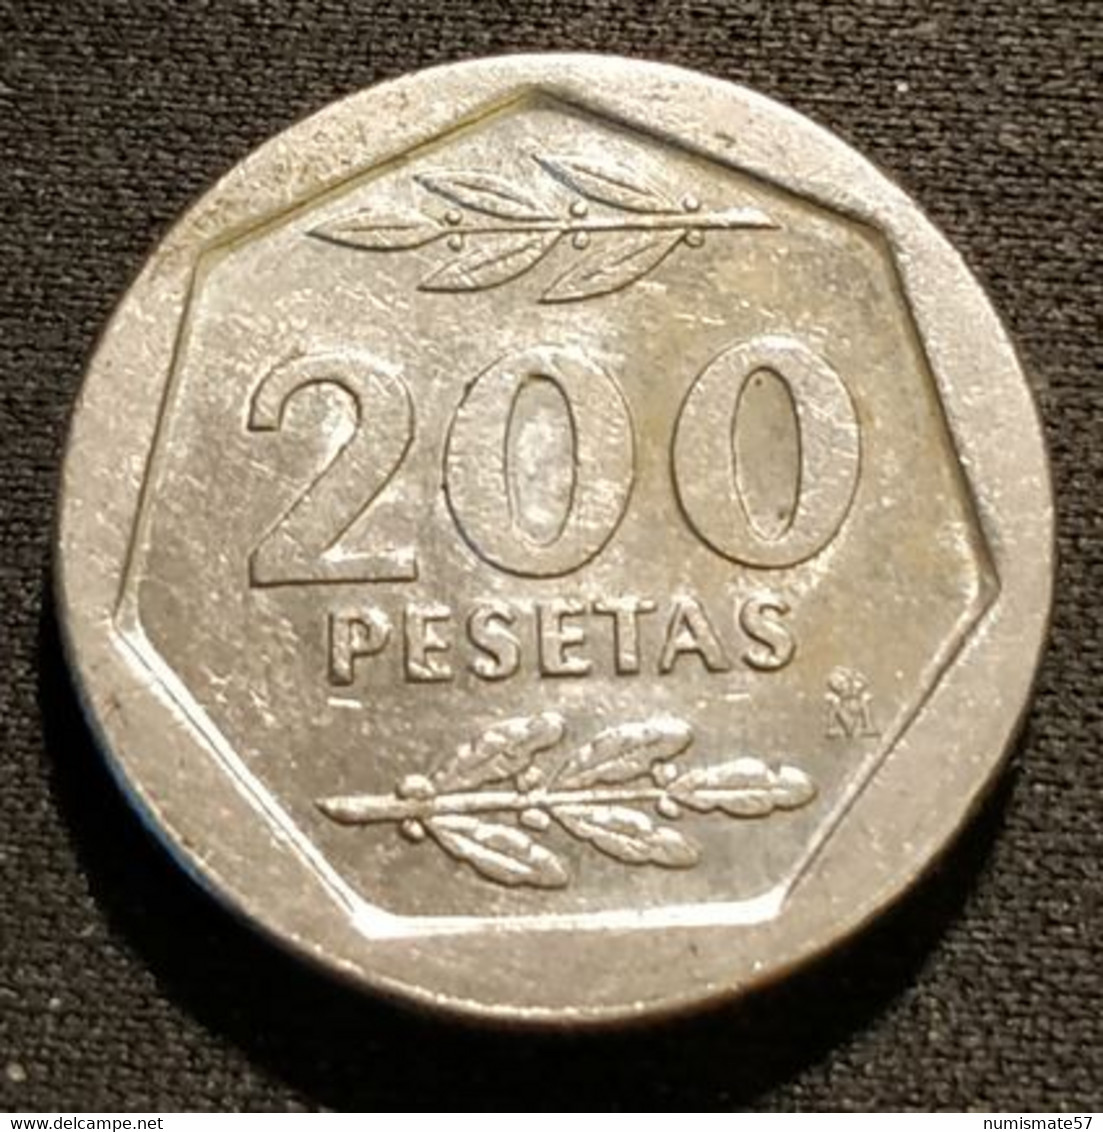 ESPAGNE - ESPANA - SPAIN - 200 PESETAS 1986 - Juan Carlos I - KM 829 - 200 Peseta